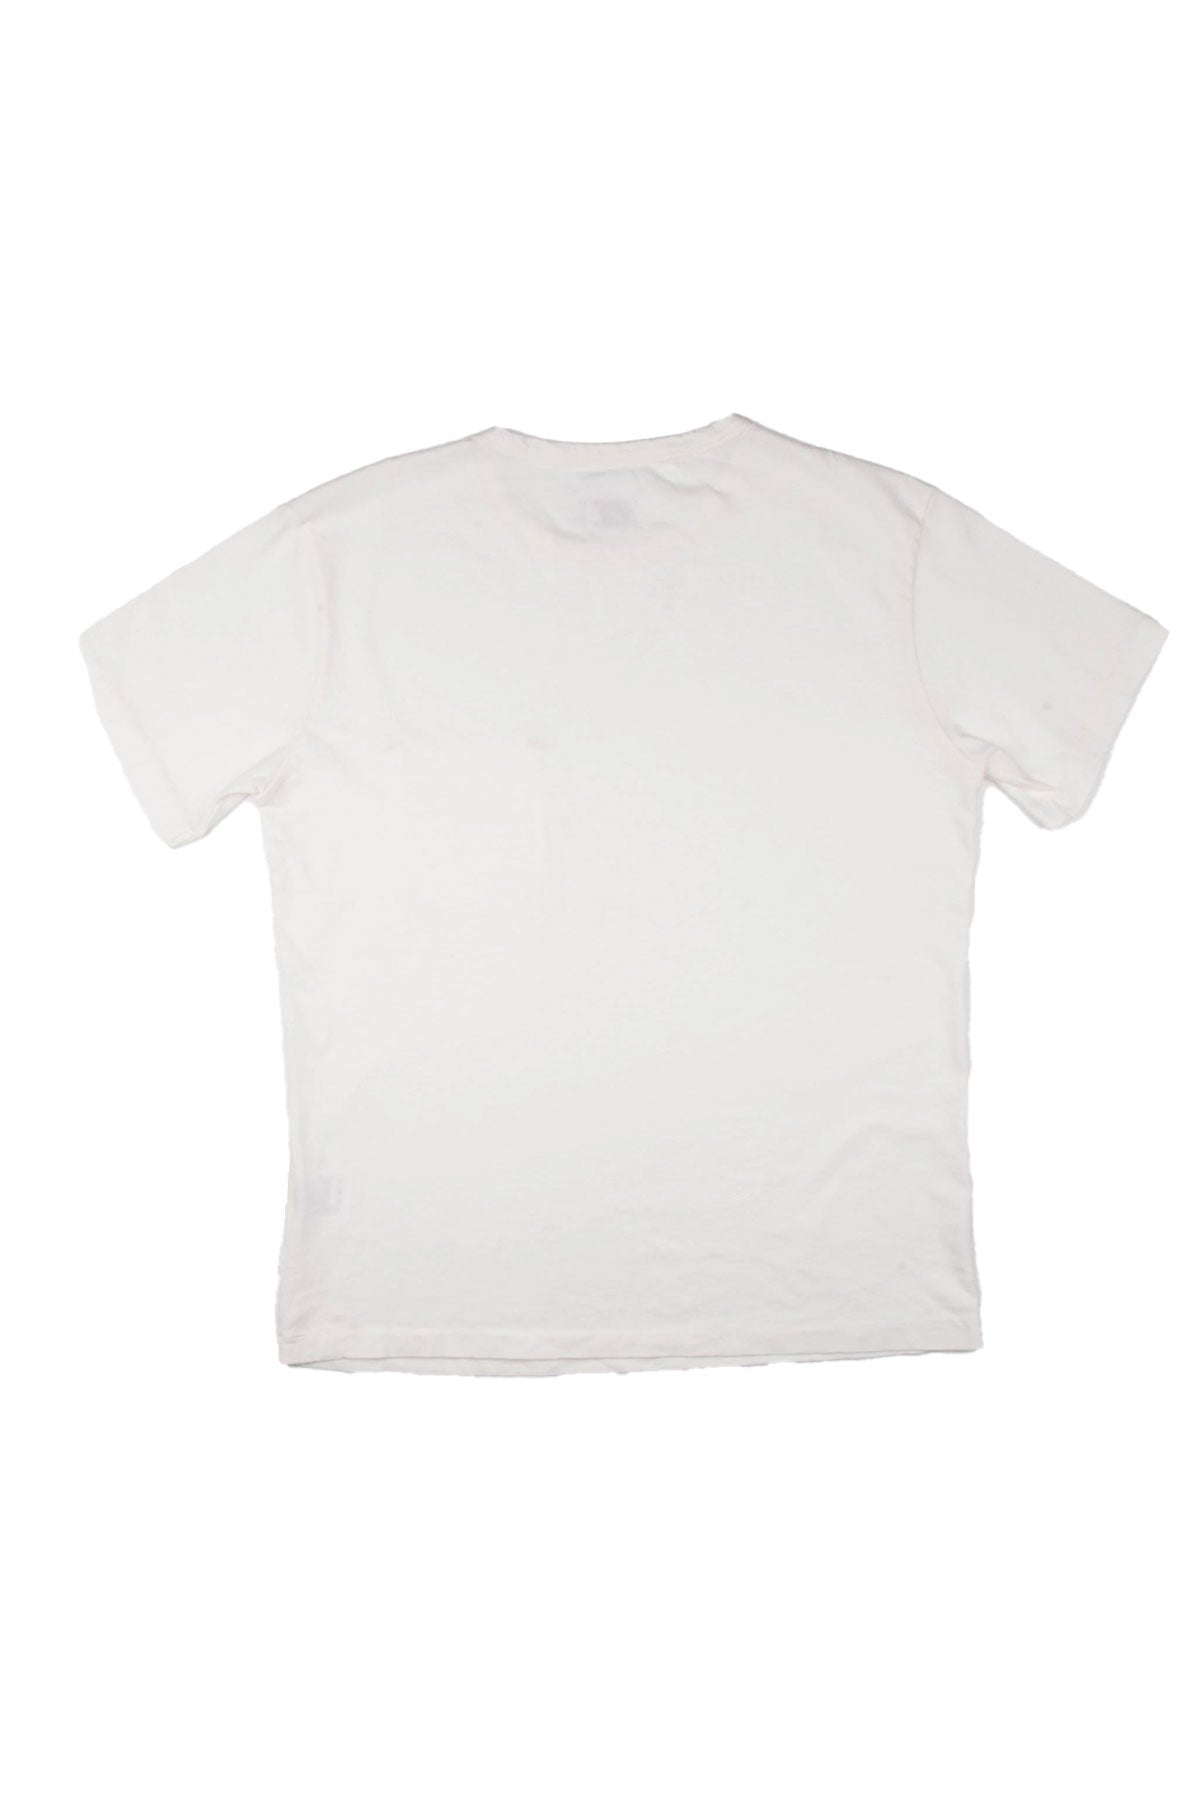 Freenote Cloth - 9 Ounce Pocket Tee - White